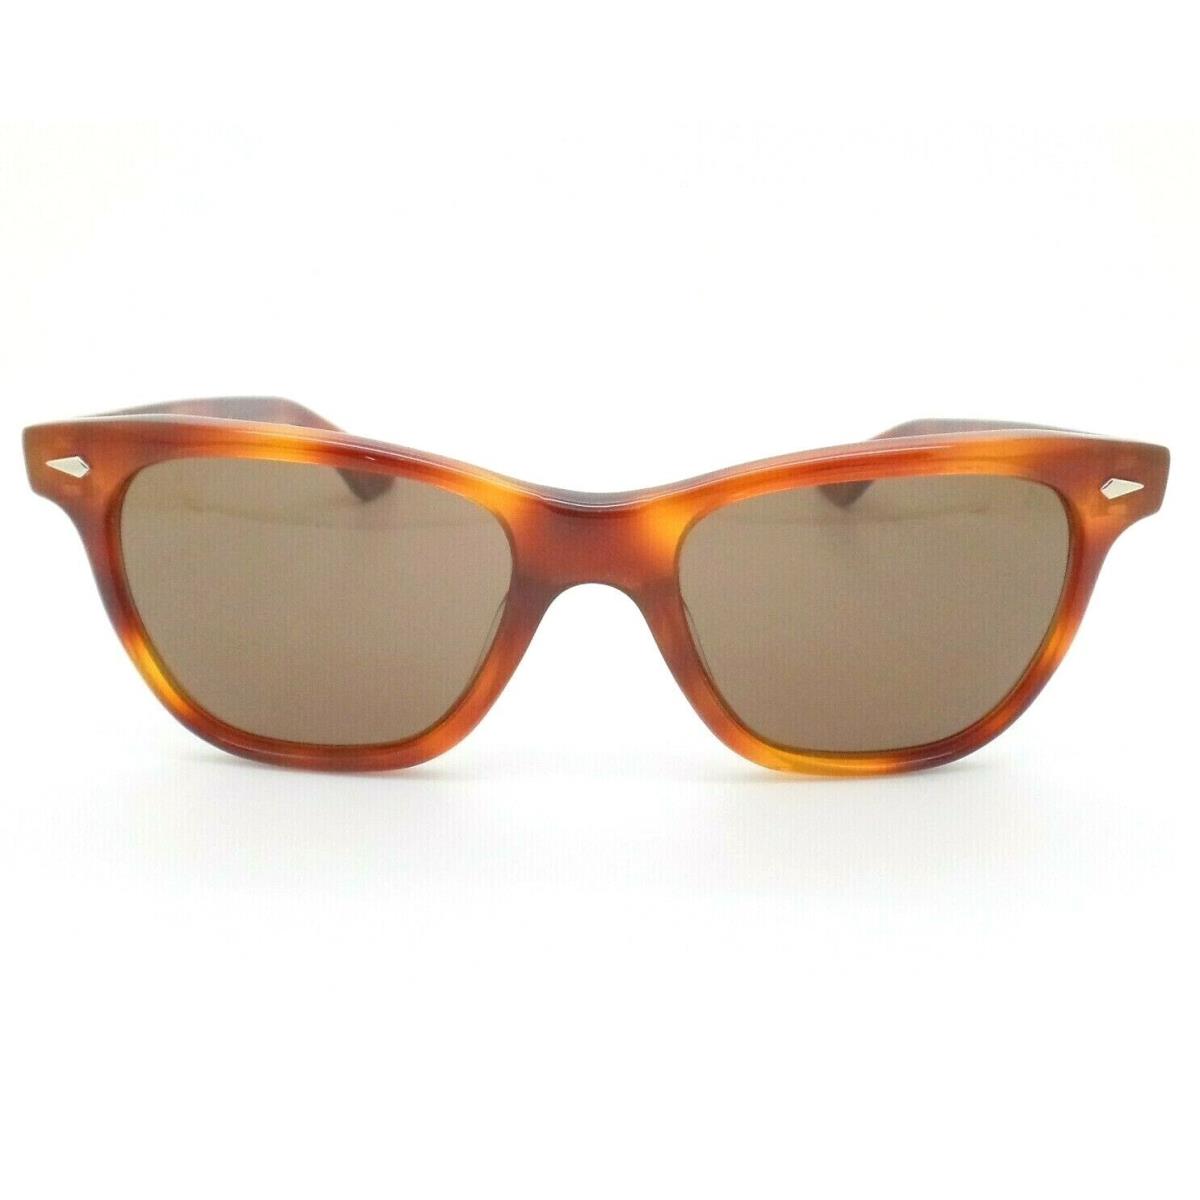 AO American Optical Saratoga Havana 4 Brown Sunglasses Polar or Frame Only